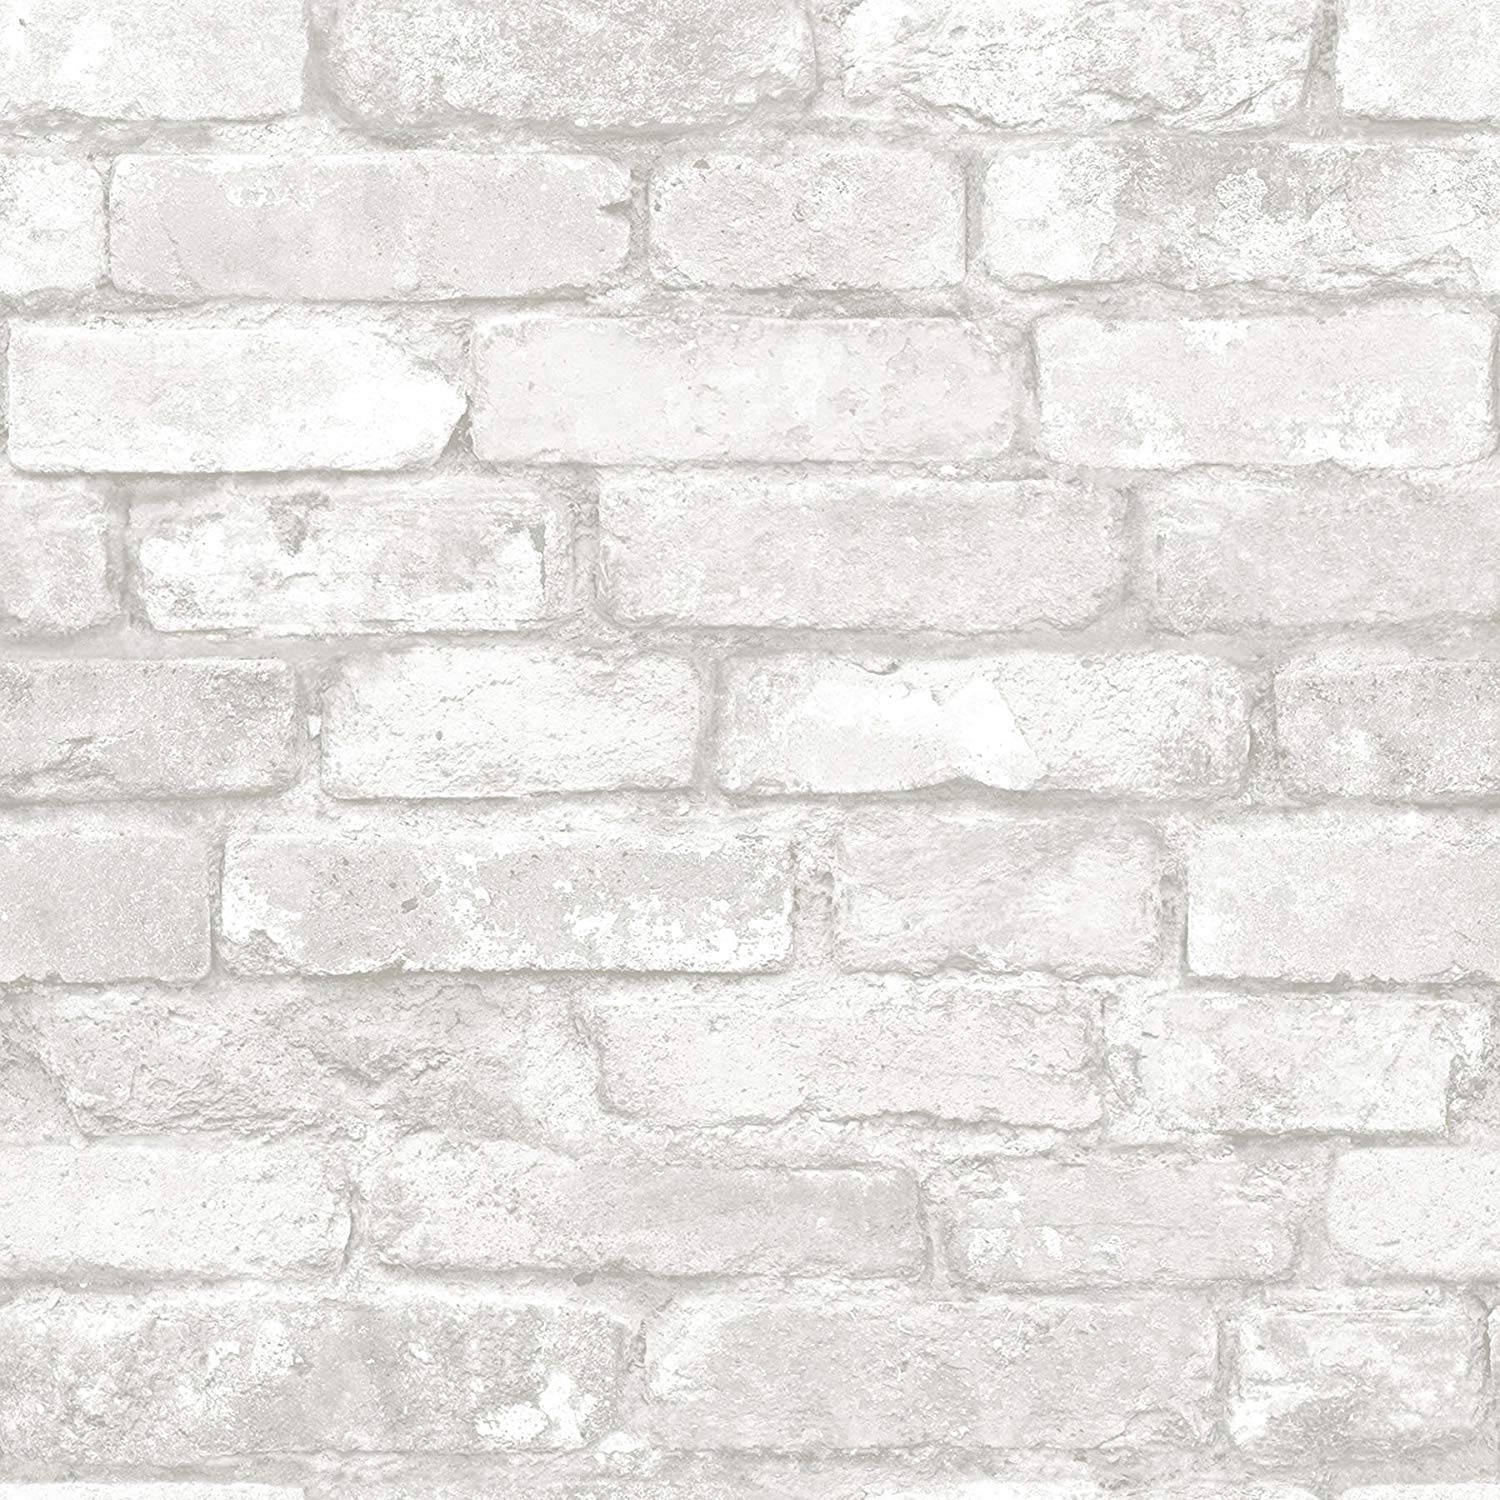 Rough White Brick Shabby Chic Wall Background